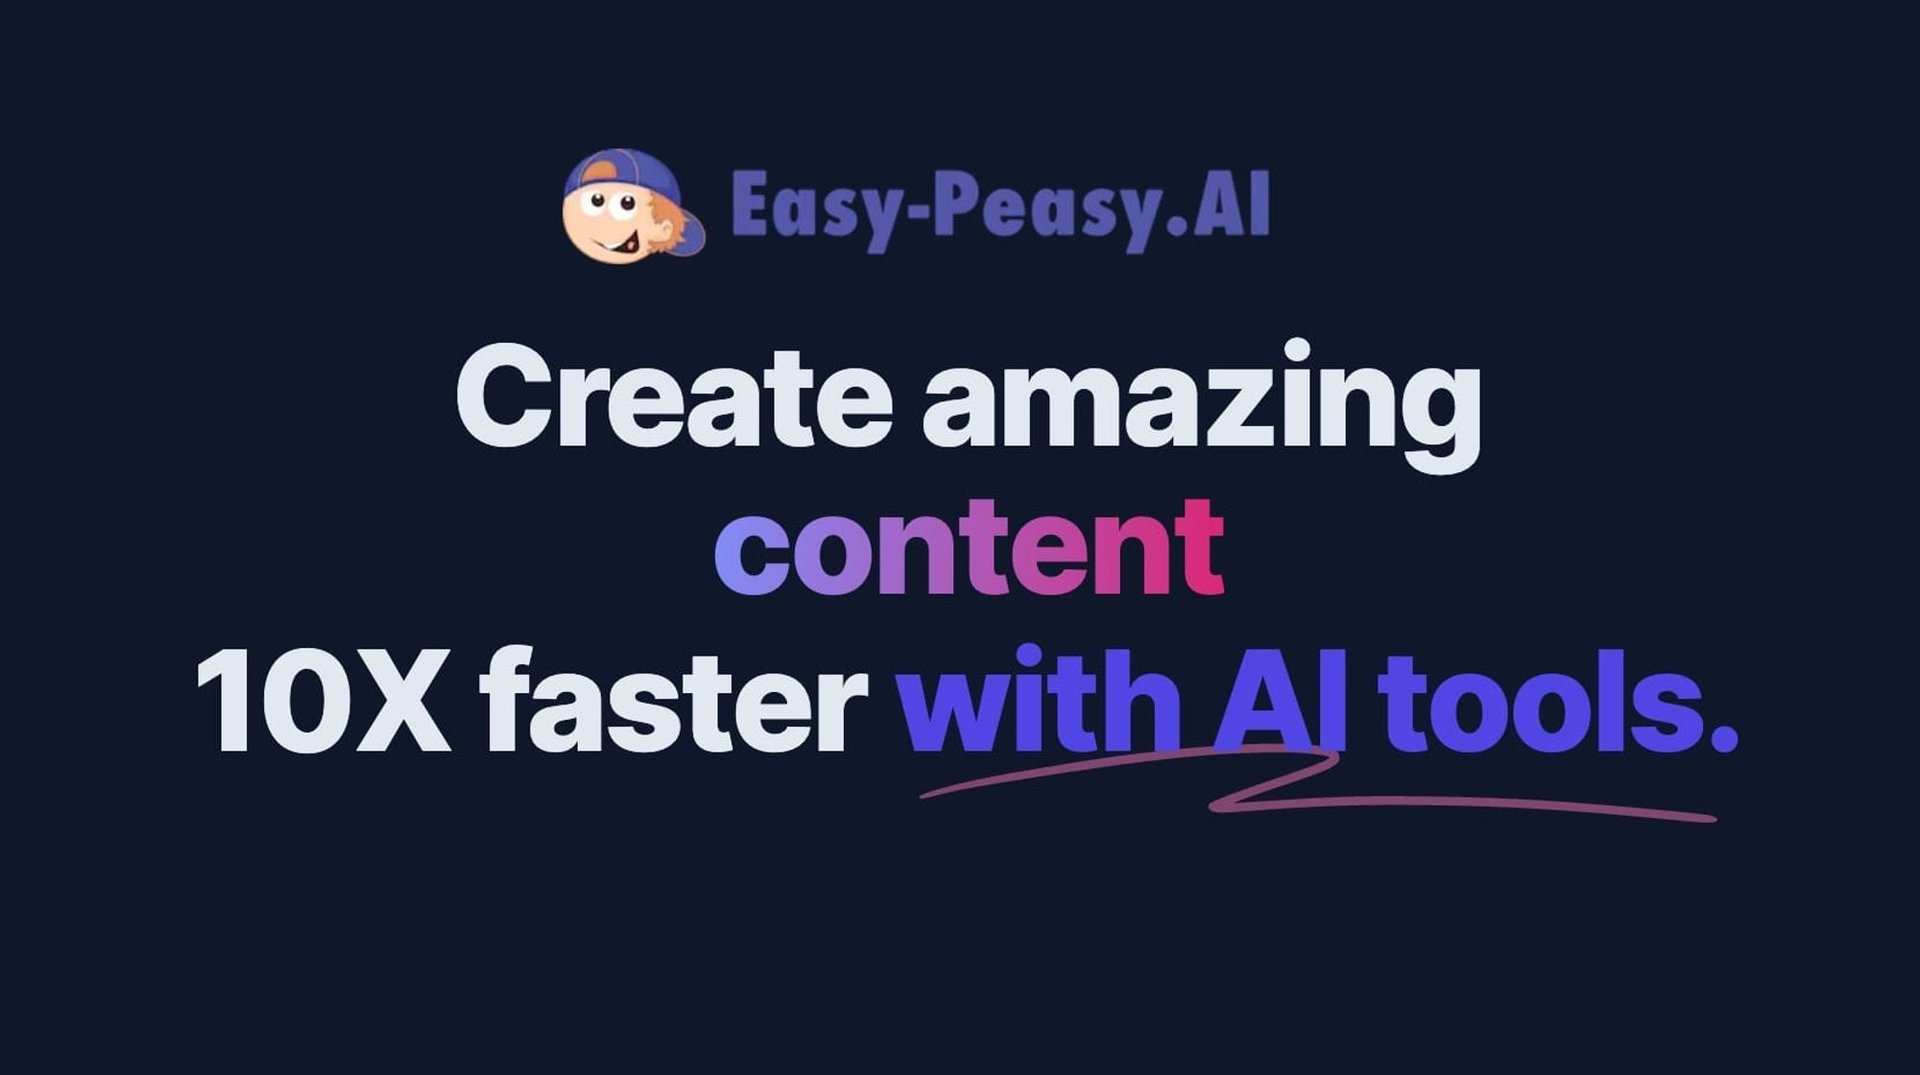 Easy-Peasy AI